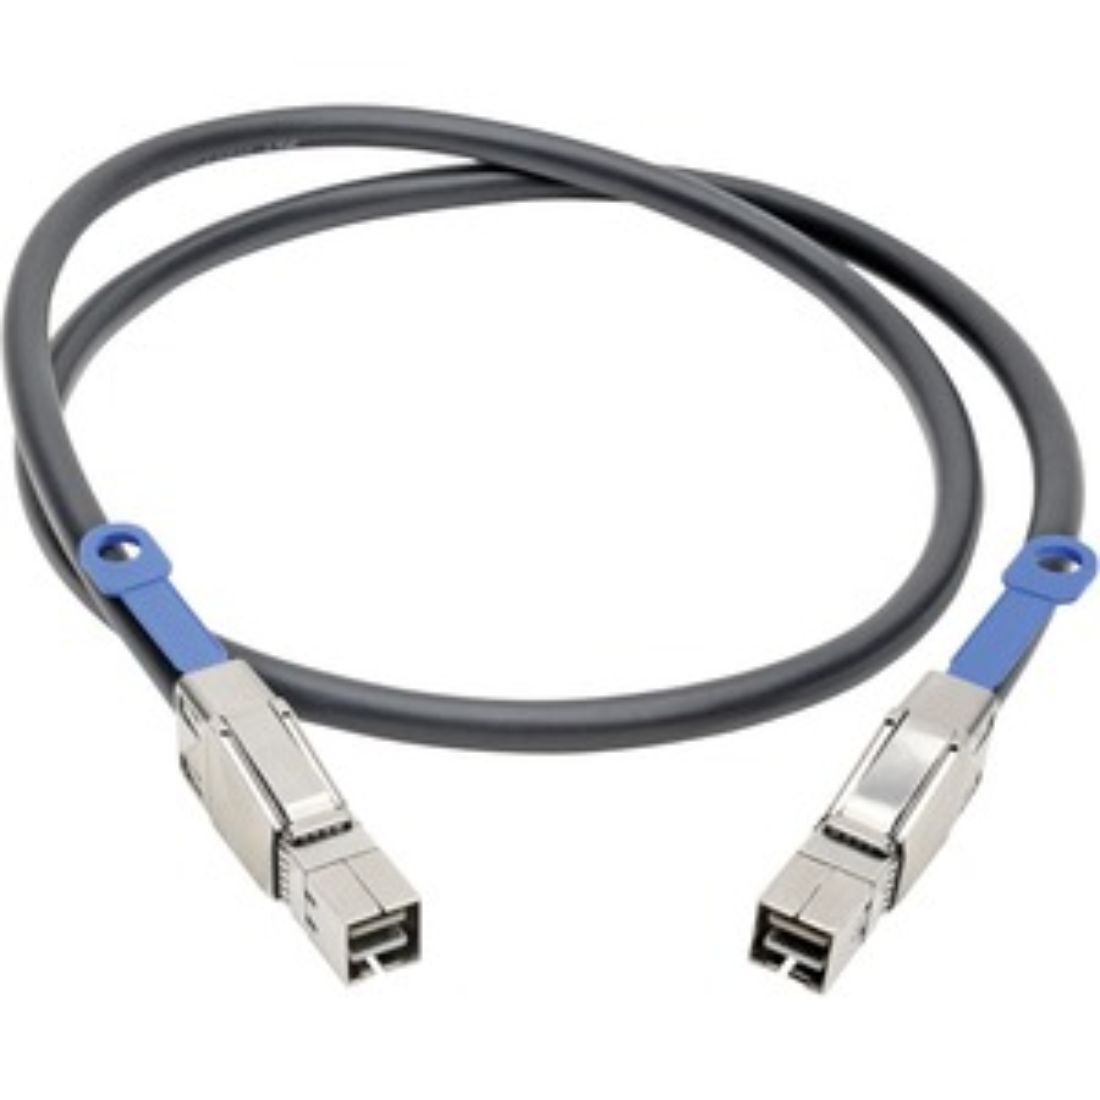 Tripp Lite 3.3 ft Mini-SAS External HD Cable - Gold Plated Contact - Black